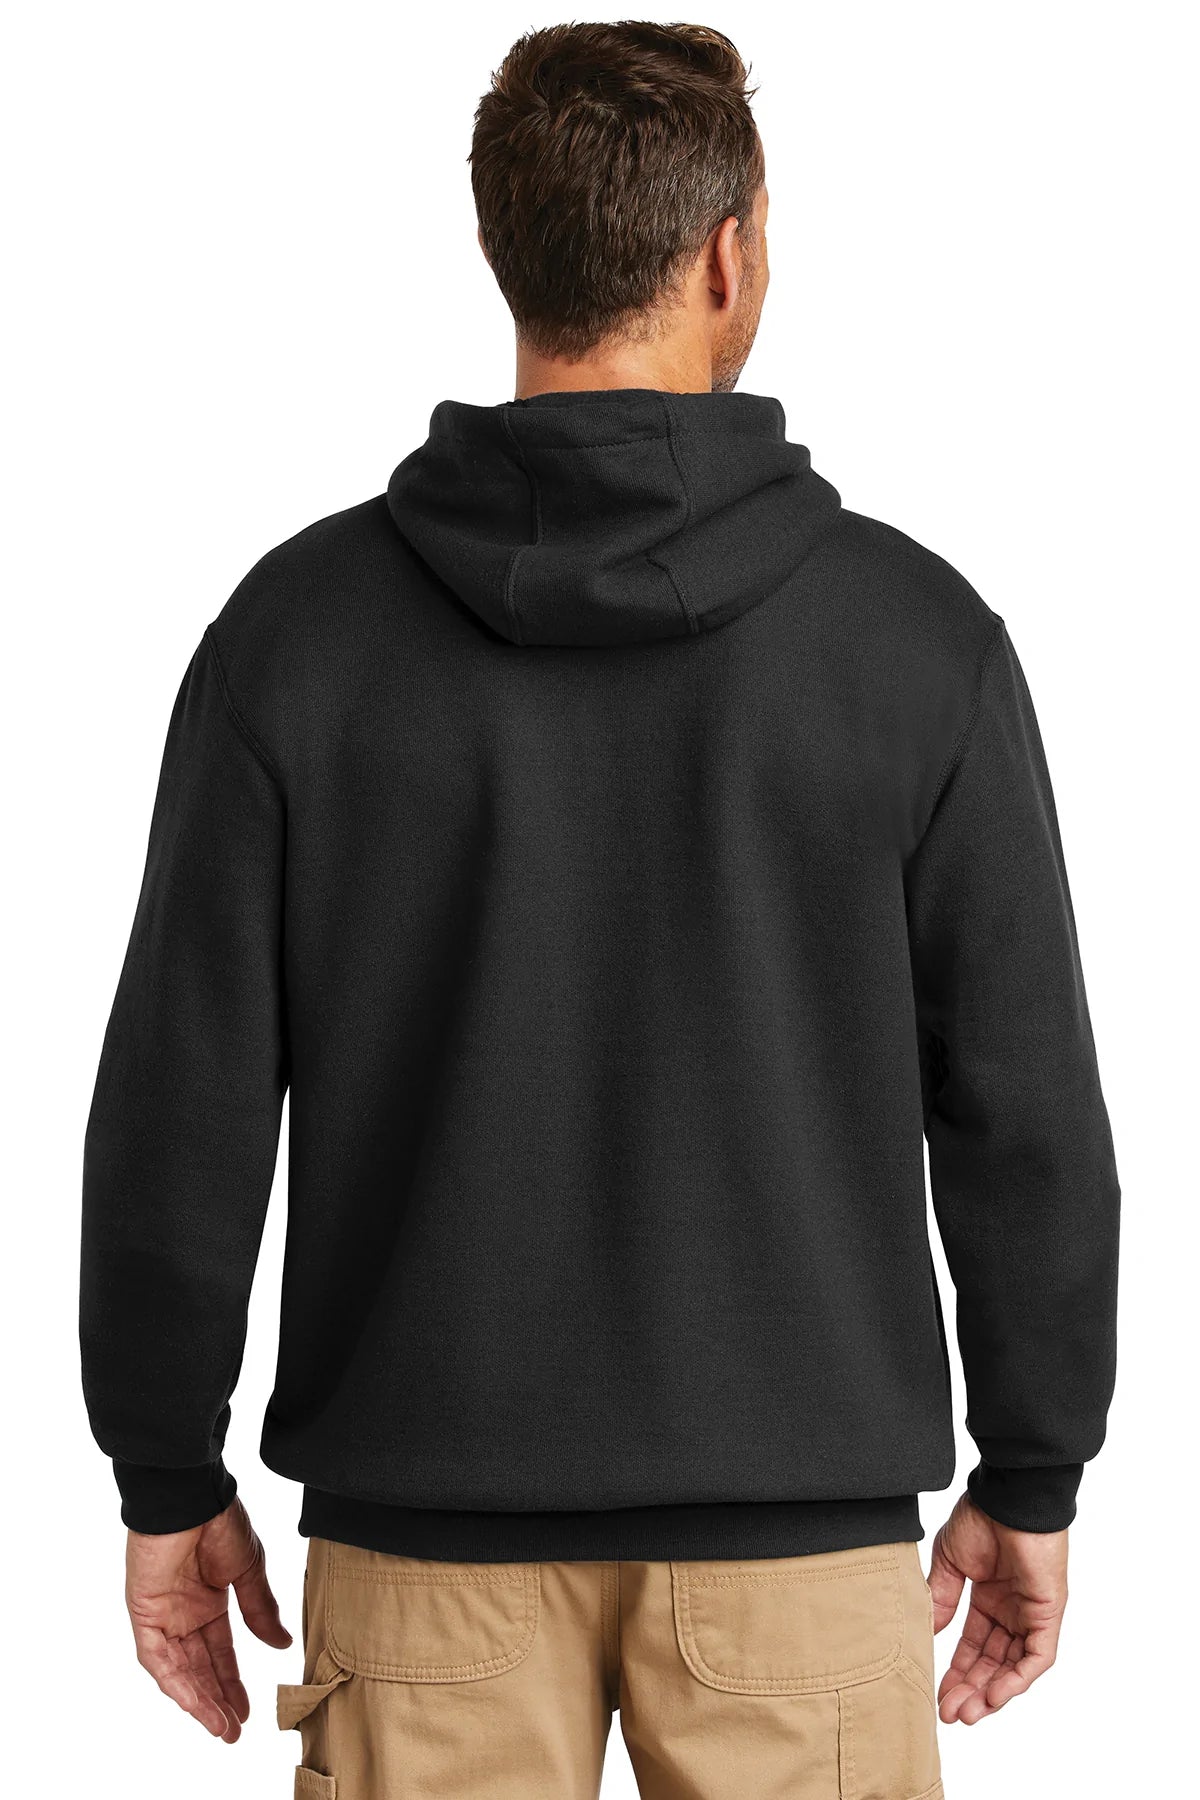 carhartt_ctk121 _black_company_logo_sweatshirts